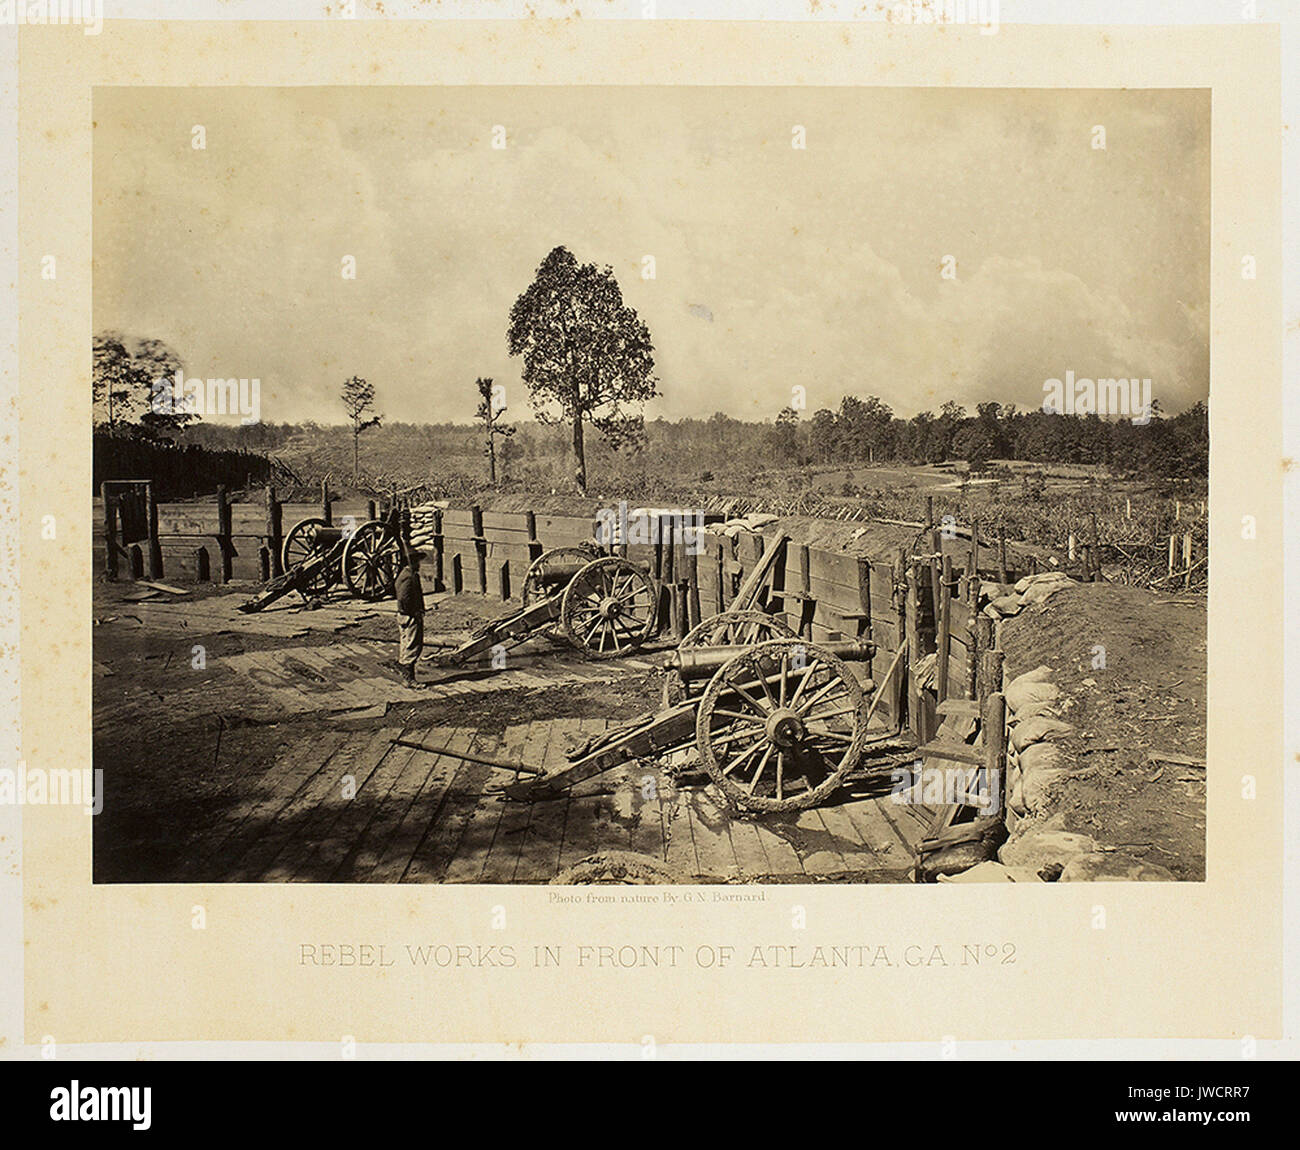 Rebel Works in Front of Atlanta, GA. No. 2 - Civil War Photographs Stock Photo